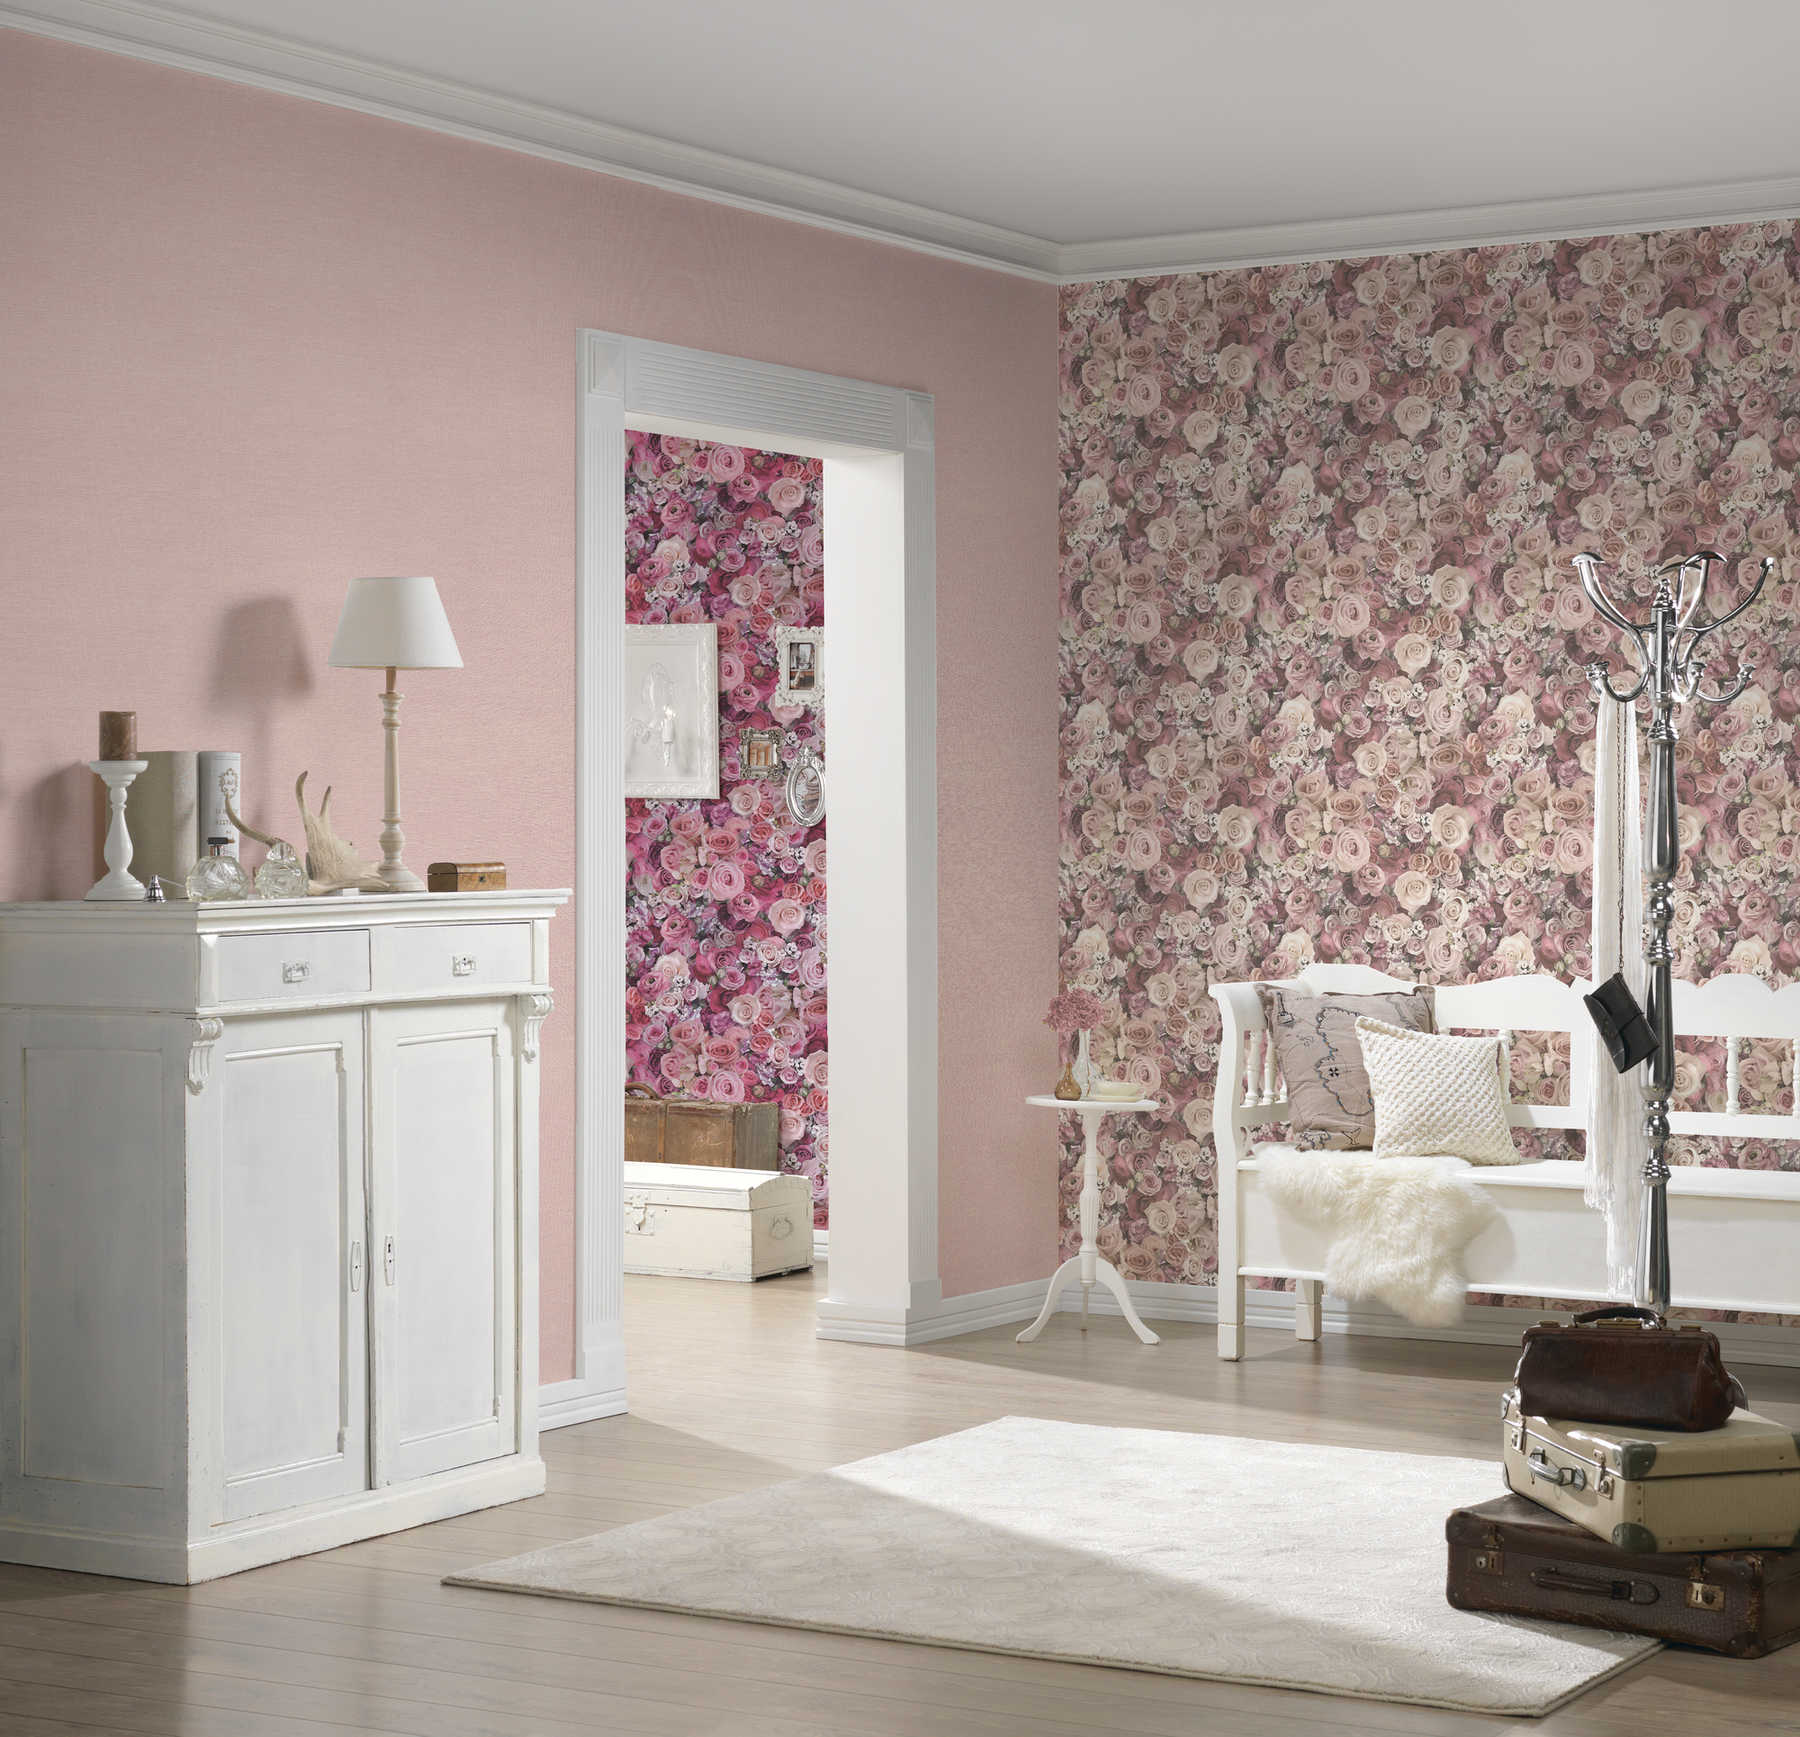             Plain wallpaper pink textile design with grey polka dots
        